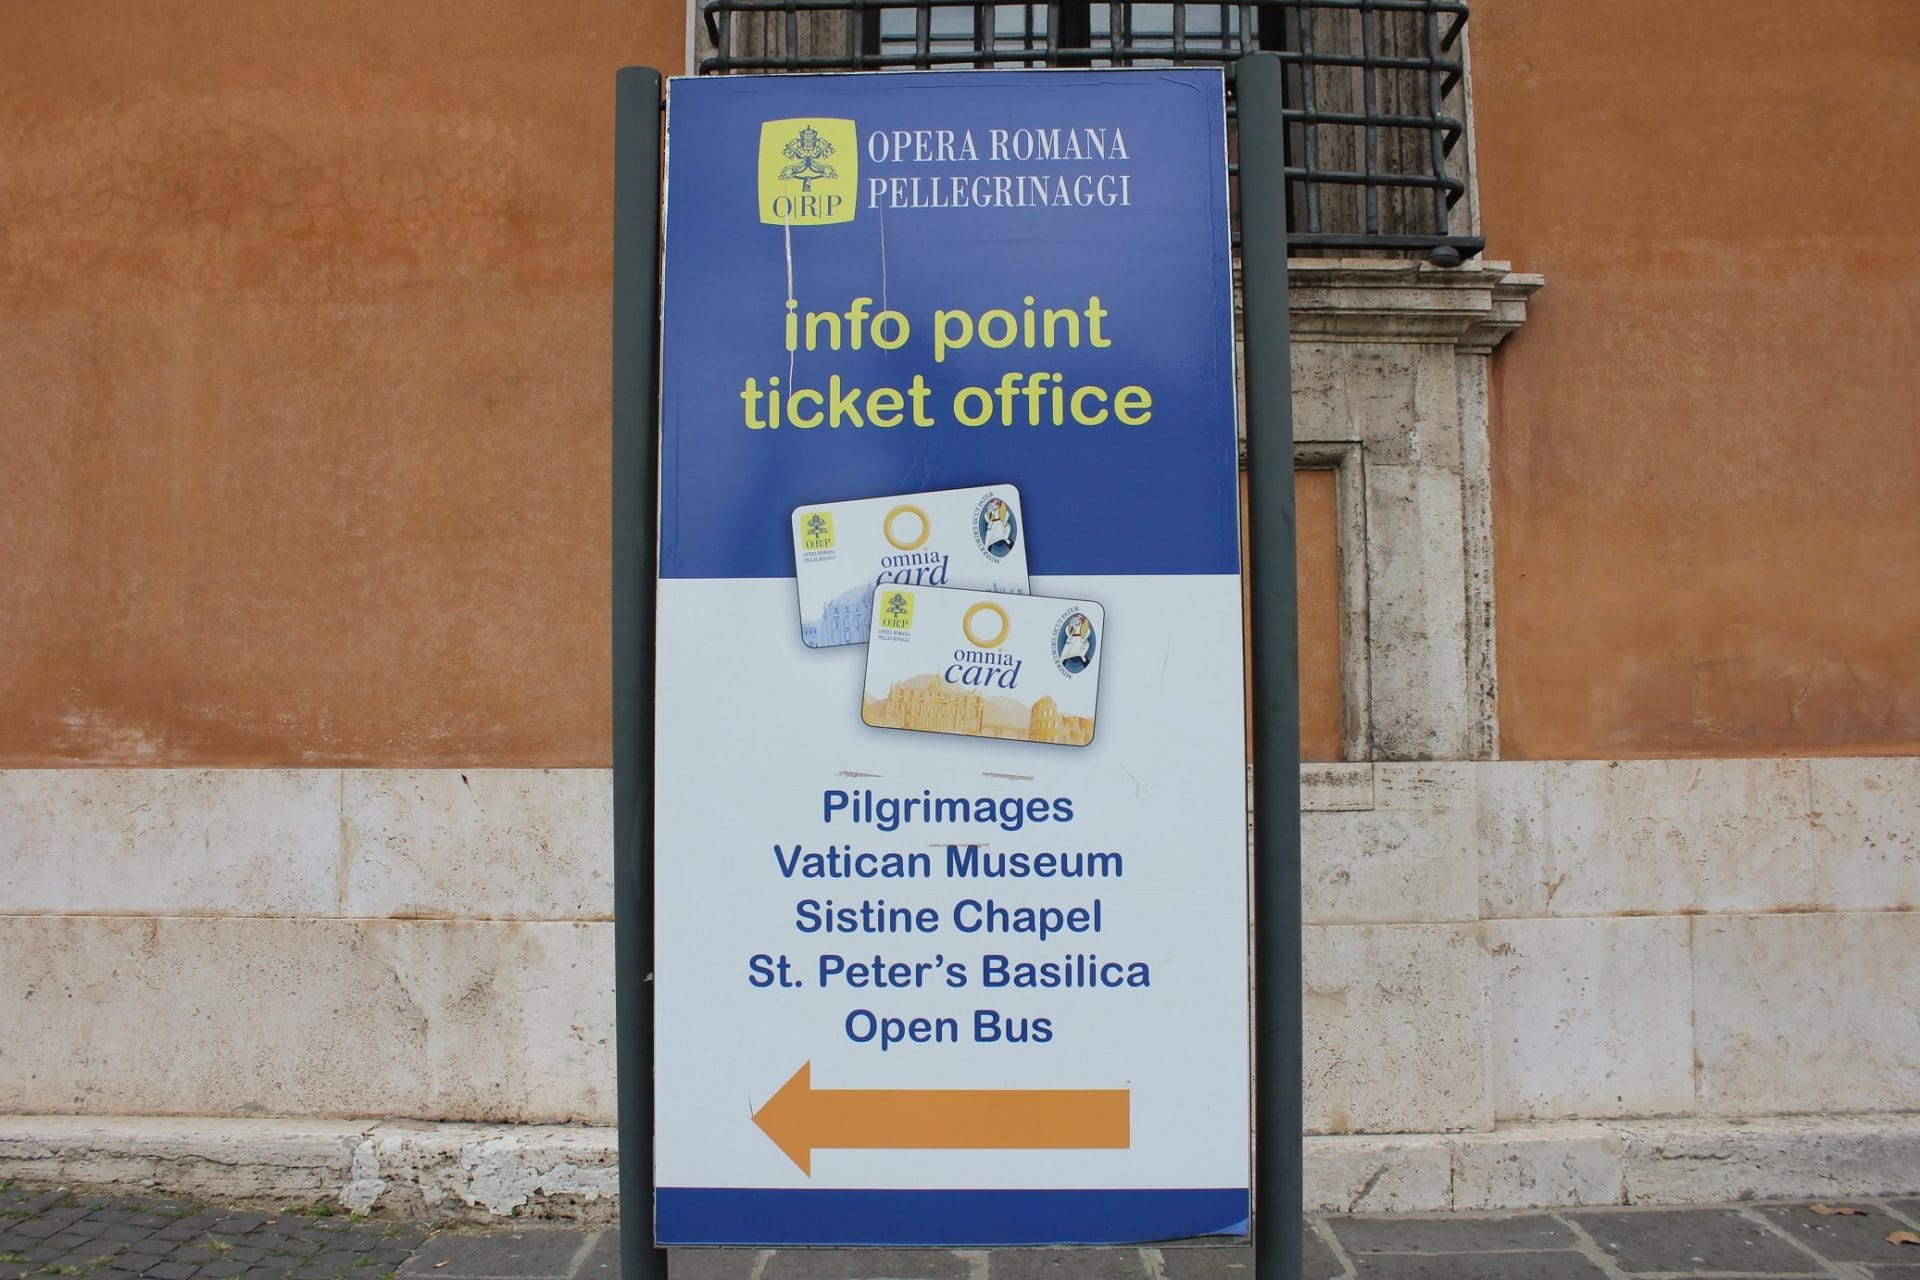 omnia card vs roma pass infos point rome